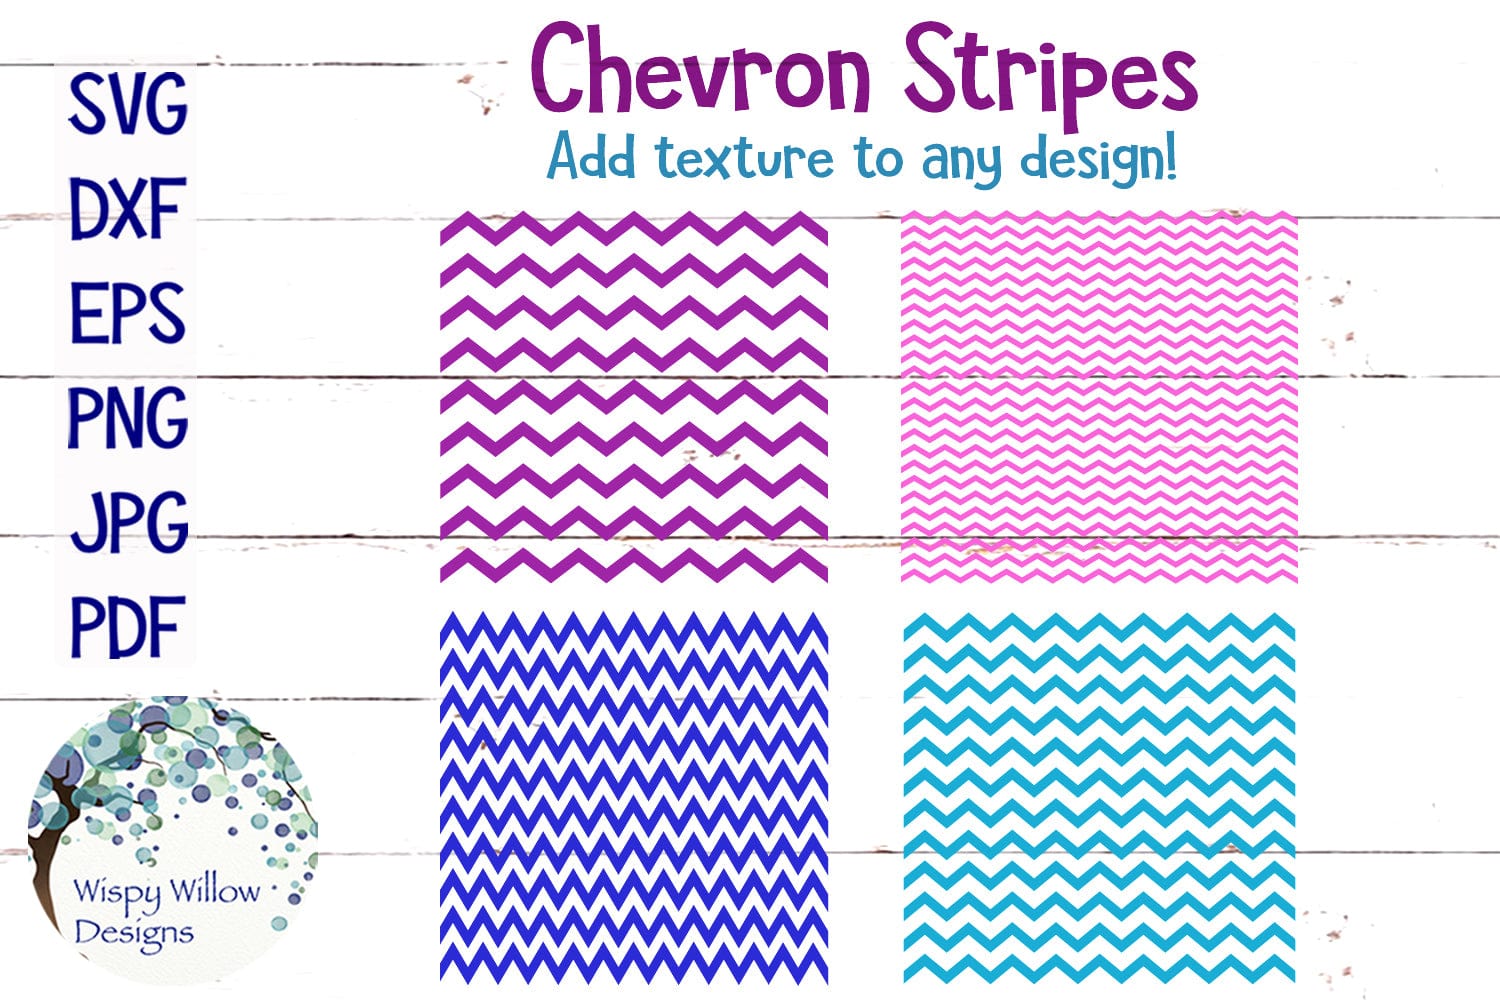 Chevron Stripes Pattern SVG Wispy Willow Designs Company